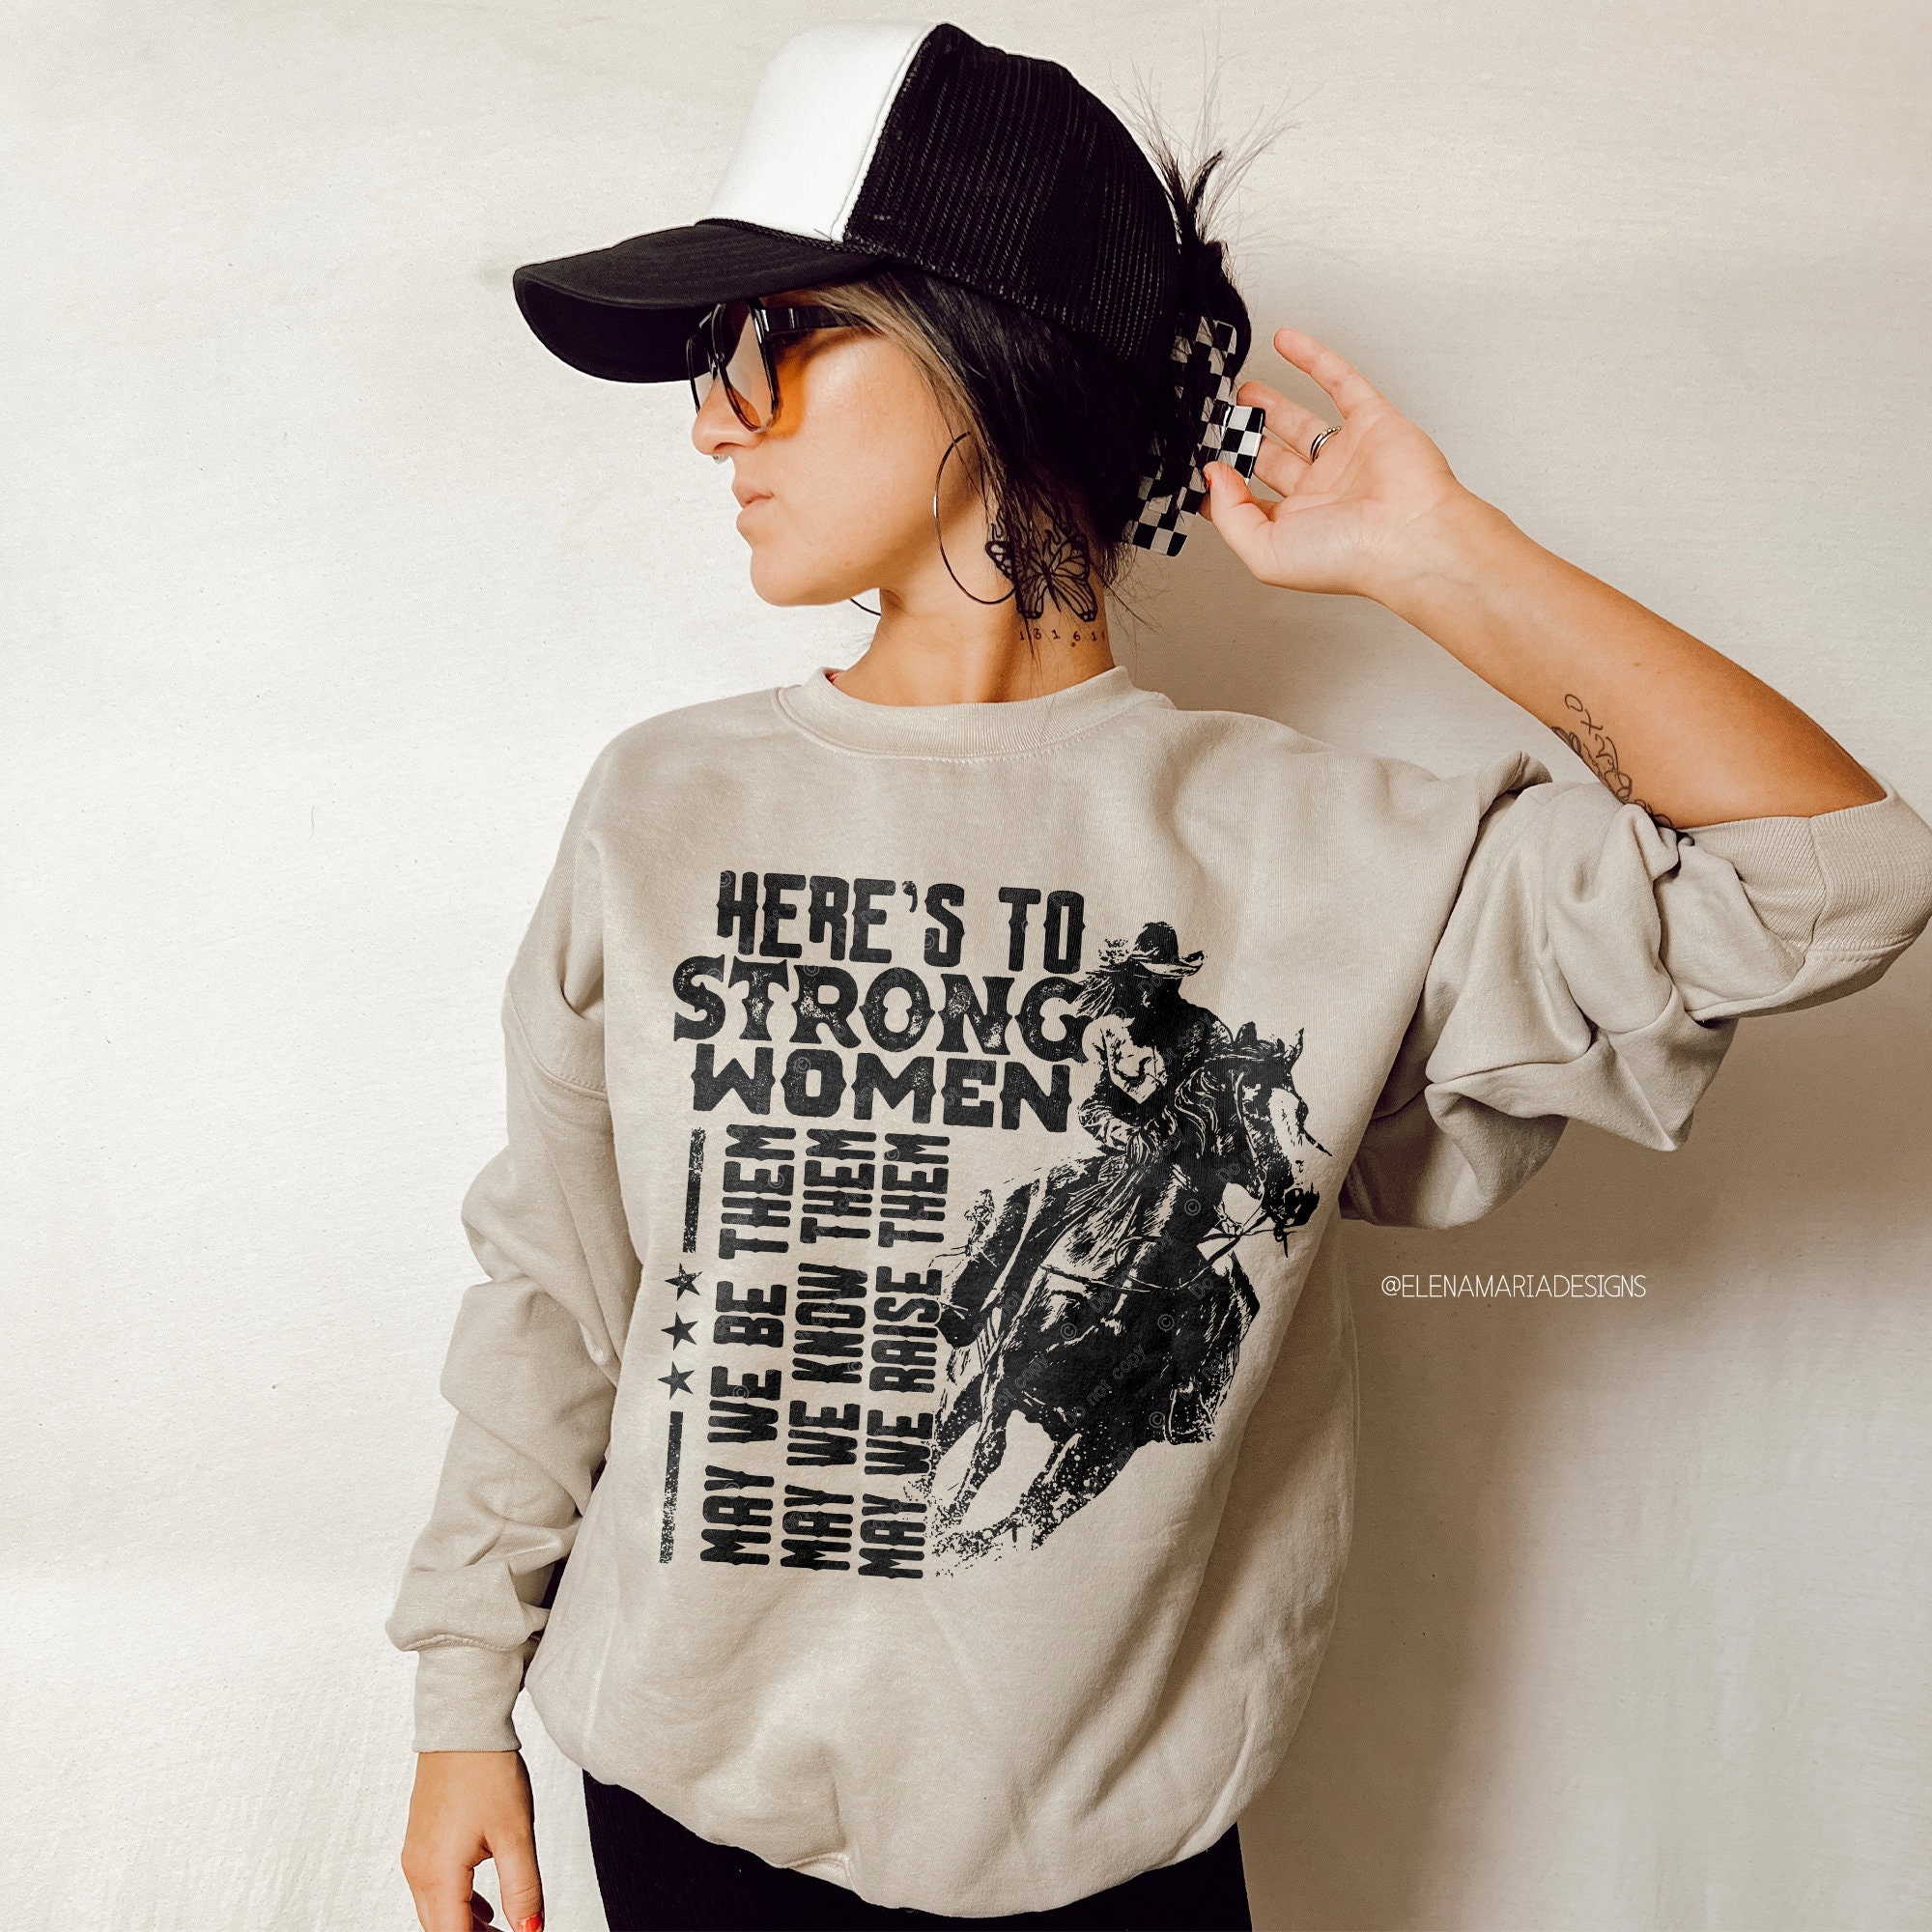 Buy online Women's Plain Crew Neck T-shirt from western wear for